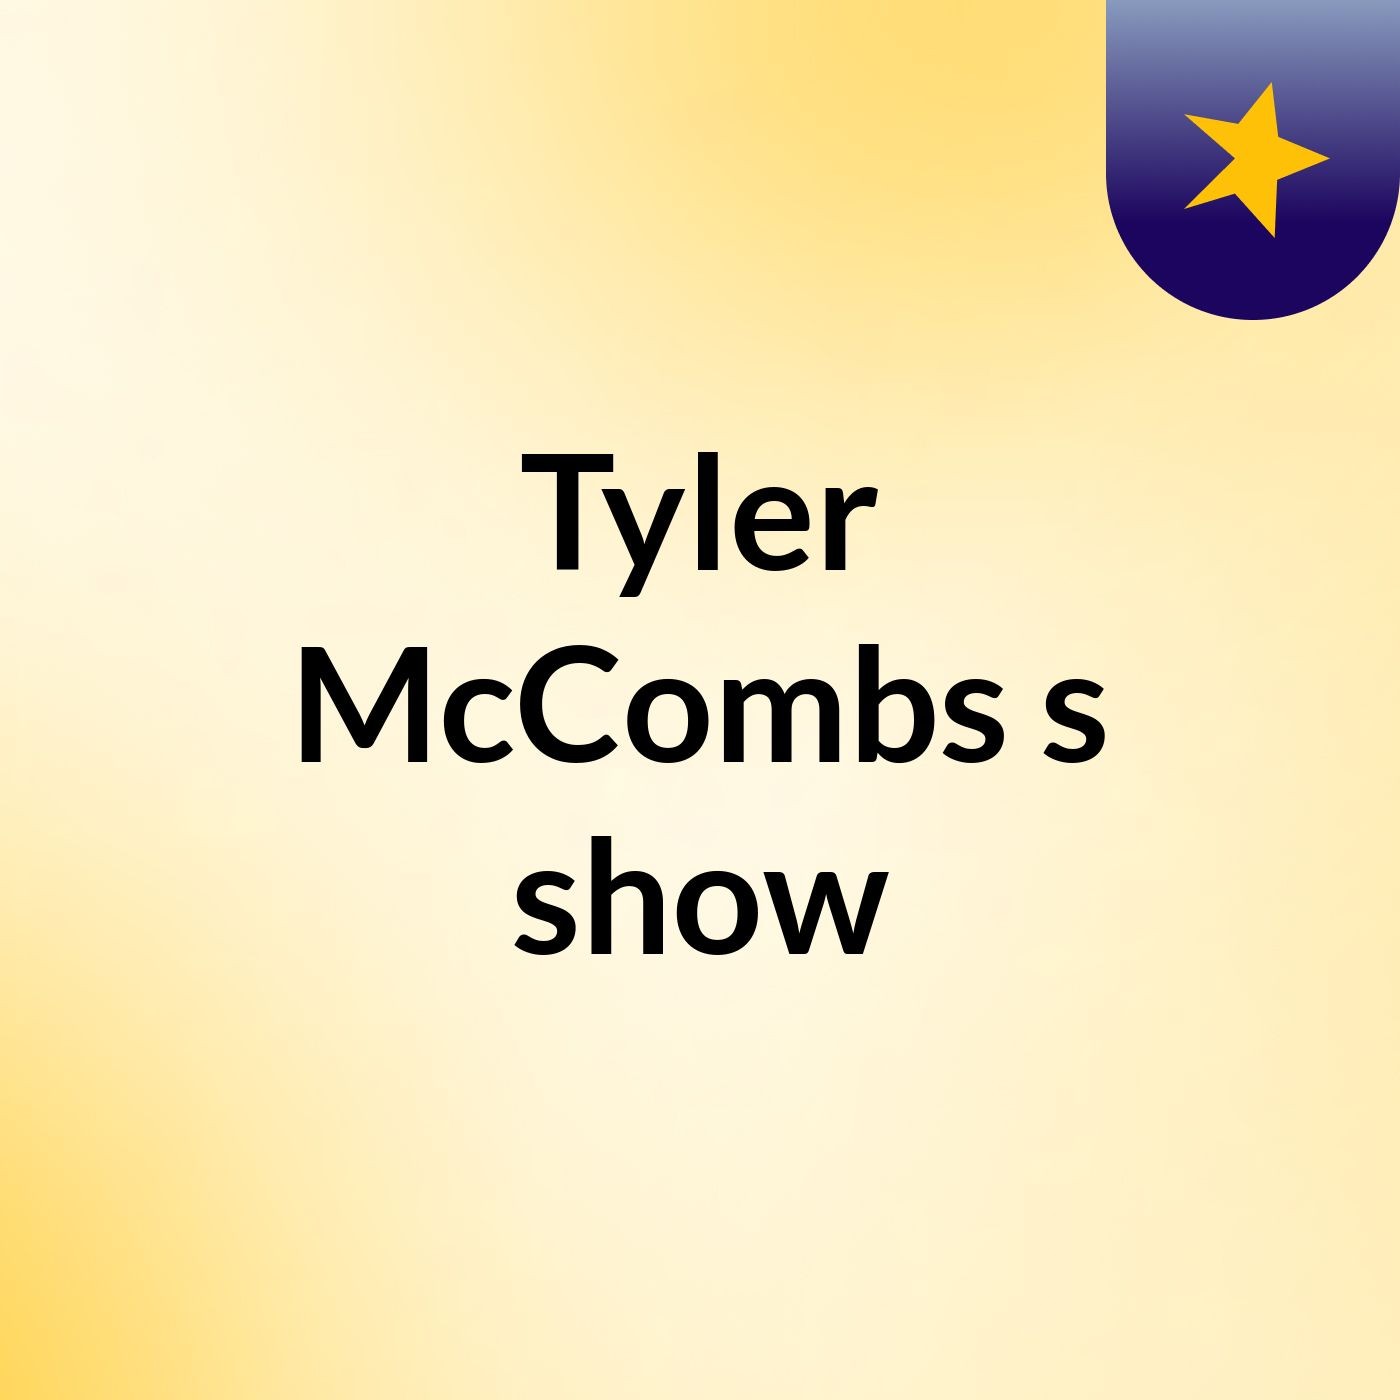 Tyler McCombs's show